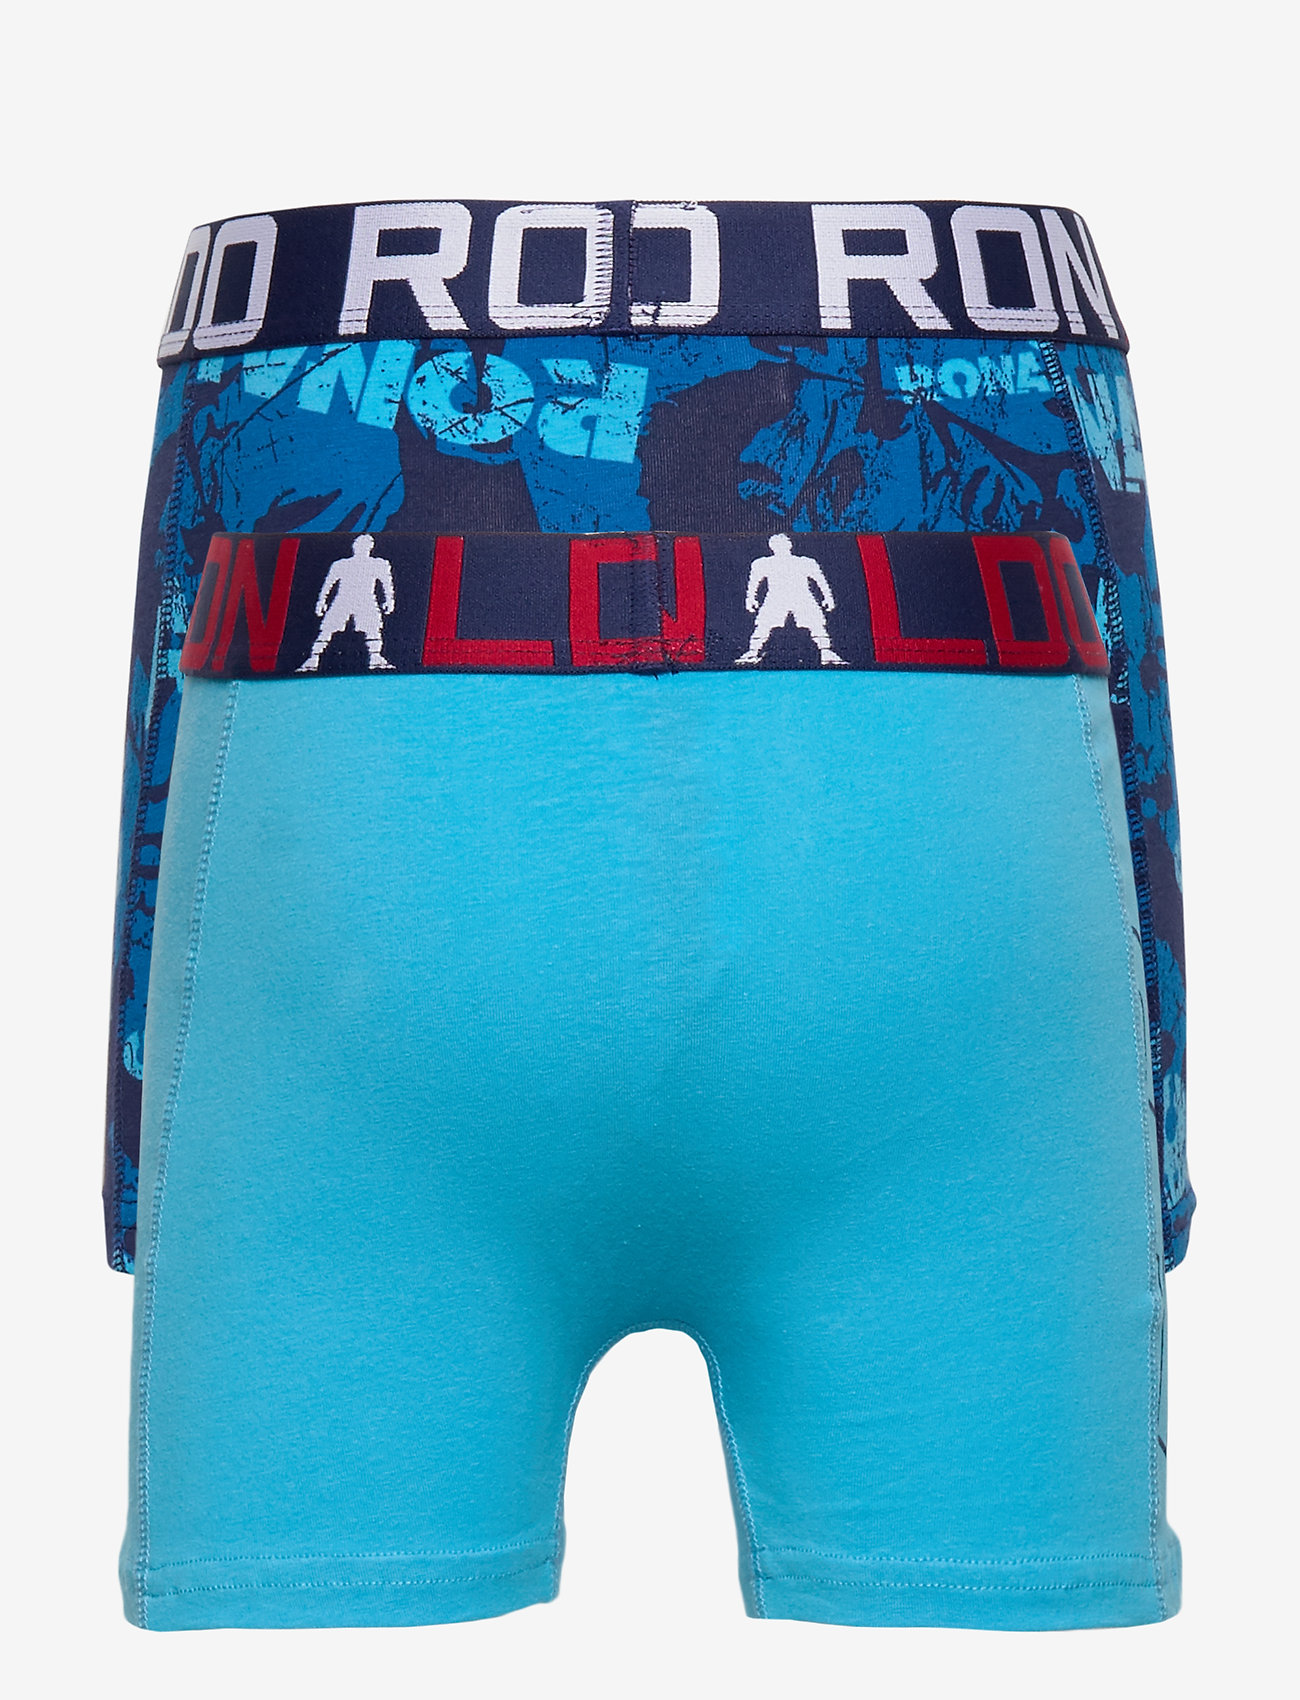 CR7 - CR7 Boy's Trunk 2-pack - underpants - multi - 1